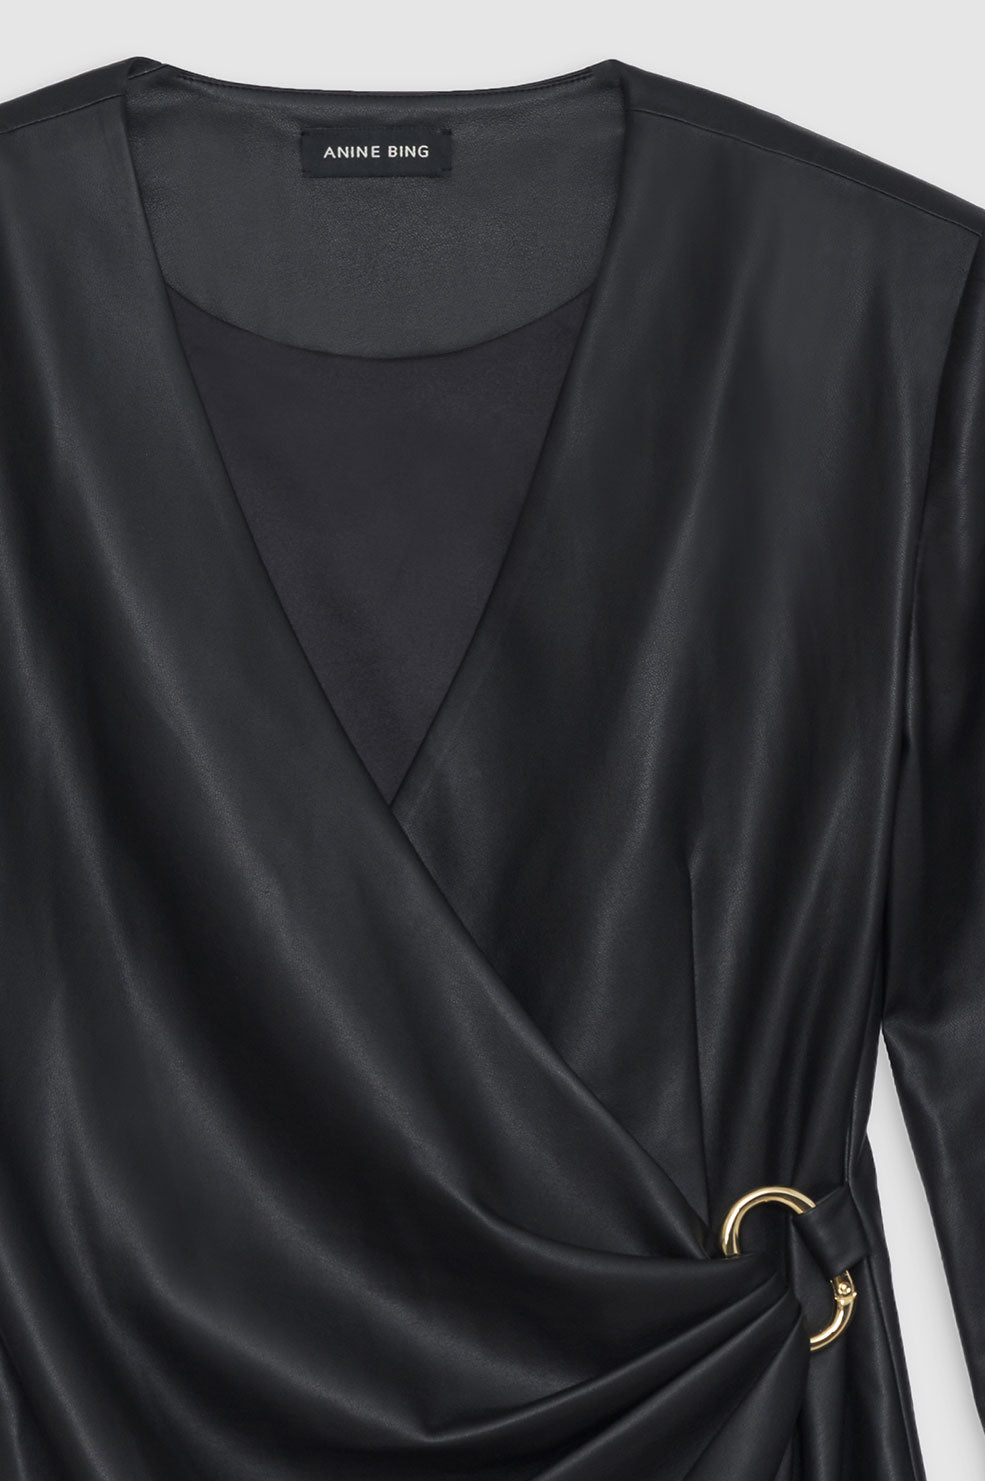 ANINE BING Joey Dress - Black - Detail View